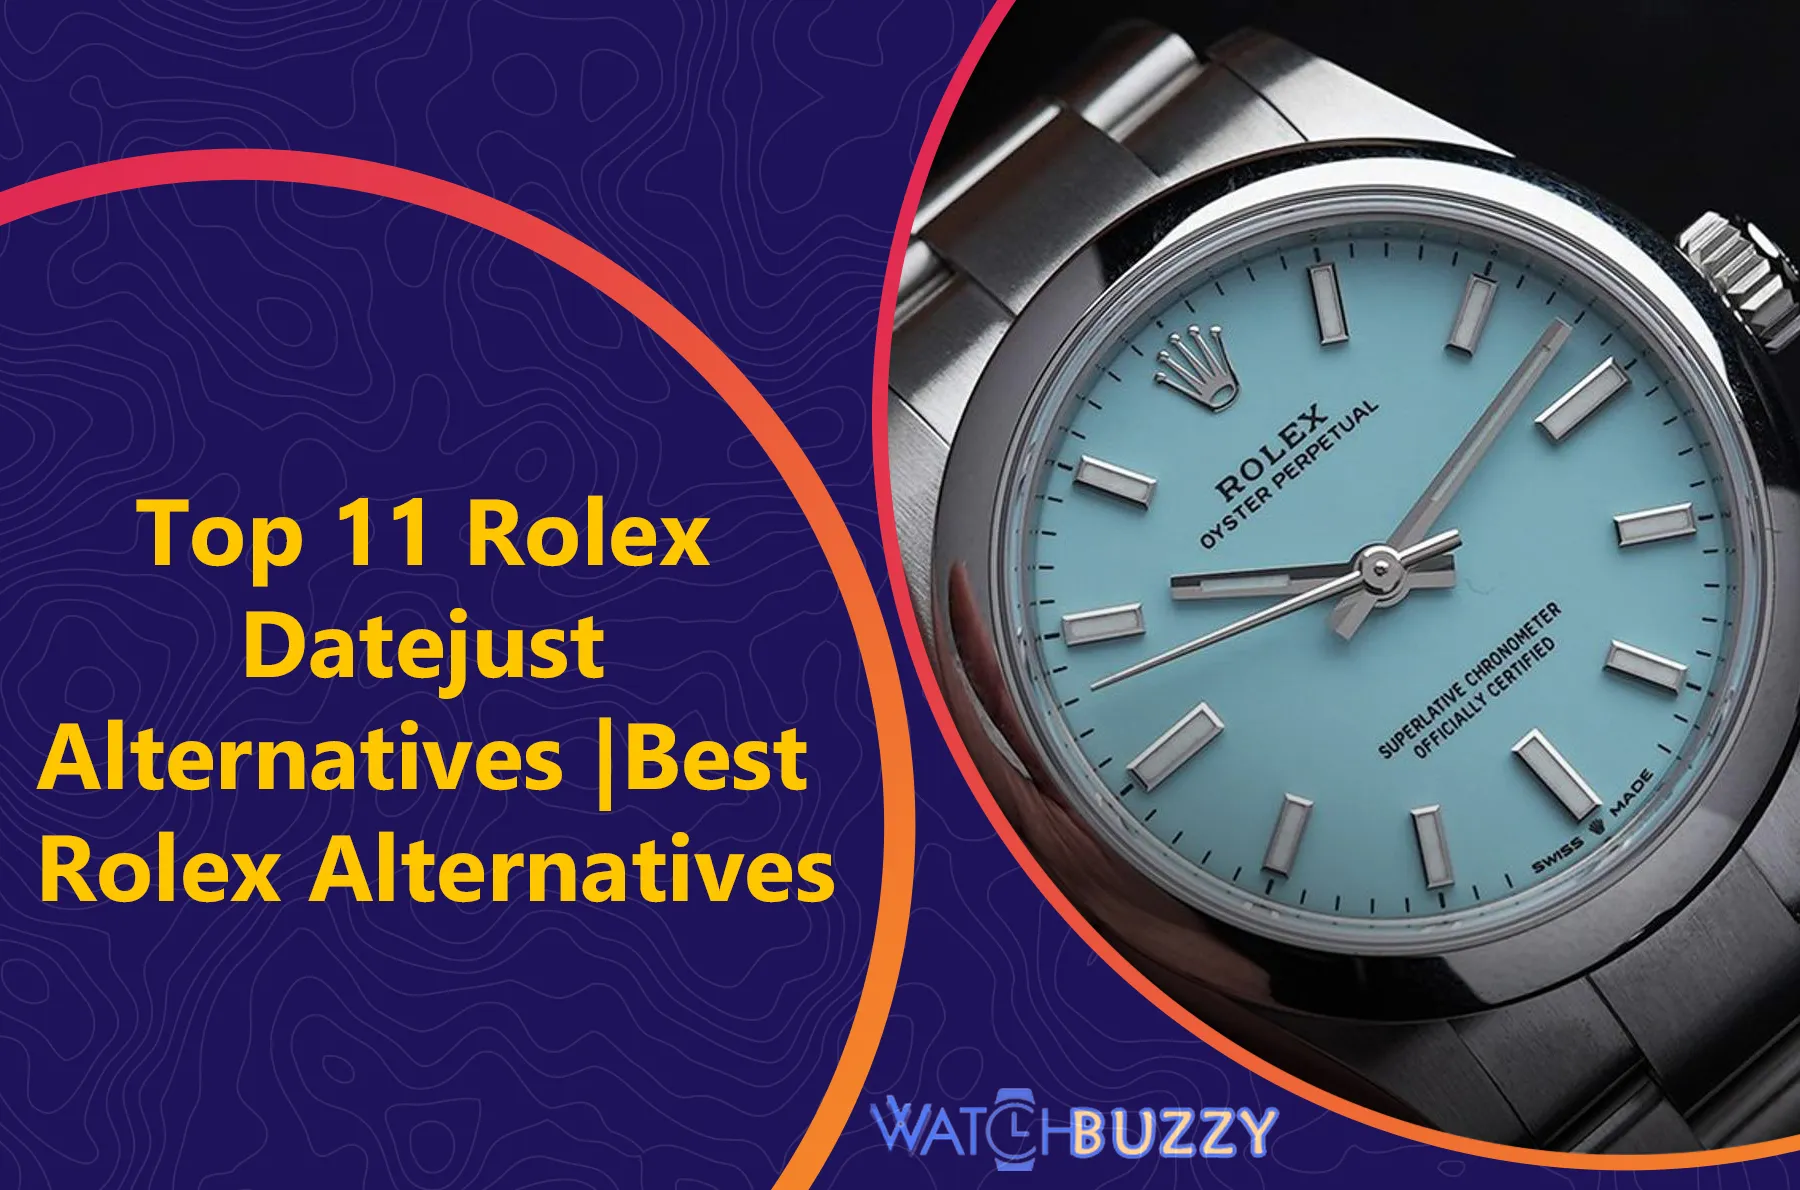 Top 11 Rolex Datejust Alternatives | Best Rolex Alternatives